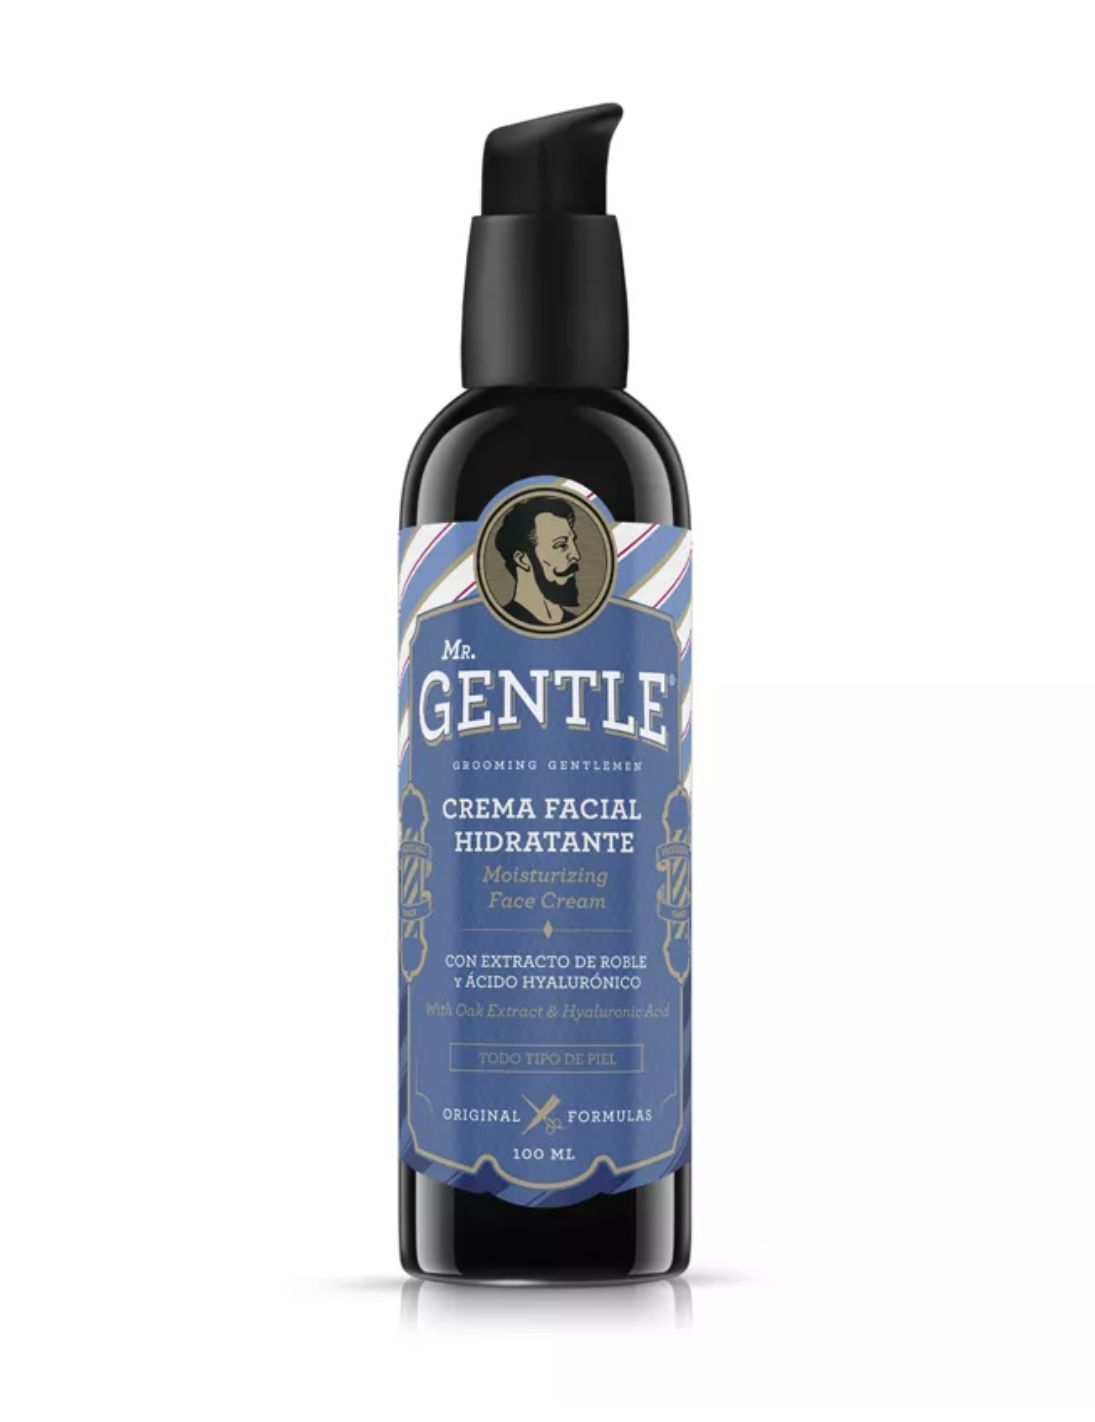 Mr. gentle крем антивозрастной для лица. Mr gentle косметика для мужчин. Мужской шампунь Mr gentle. Gentle мужской крем.